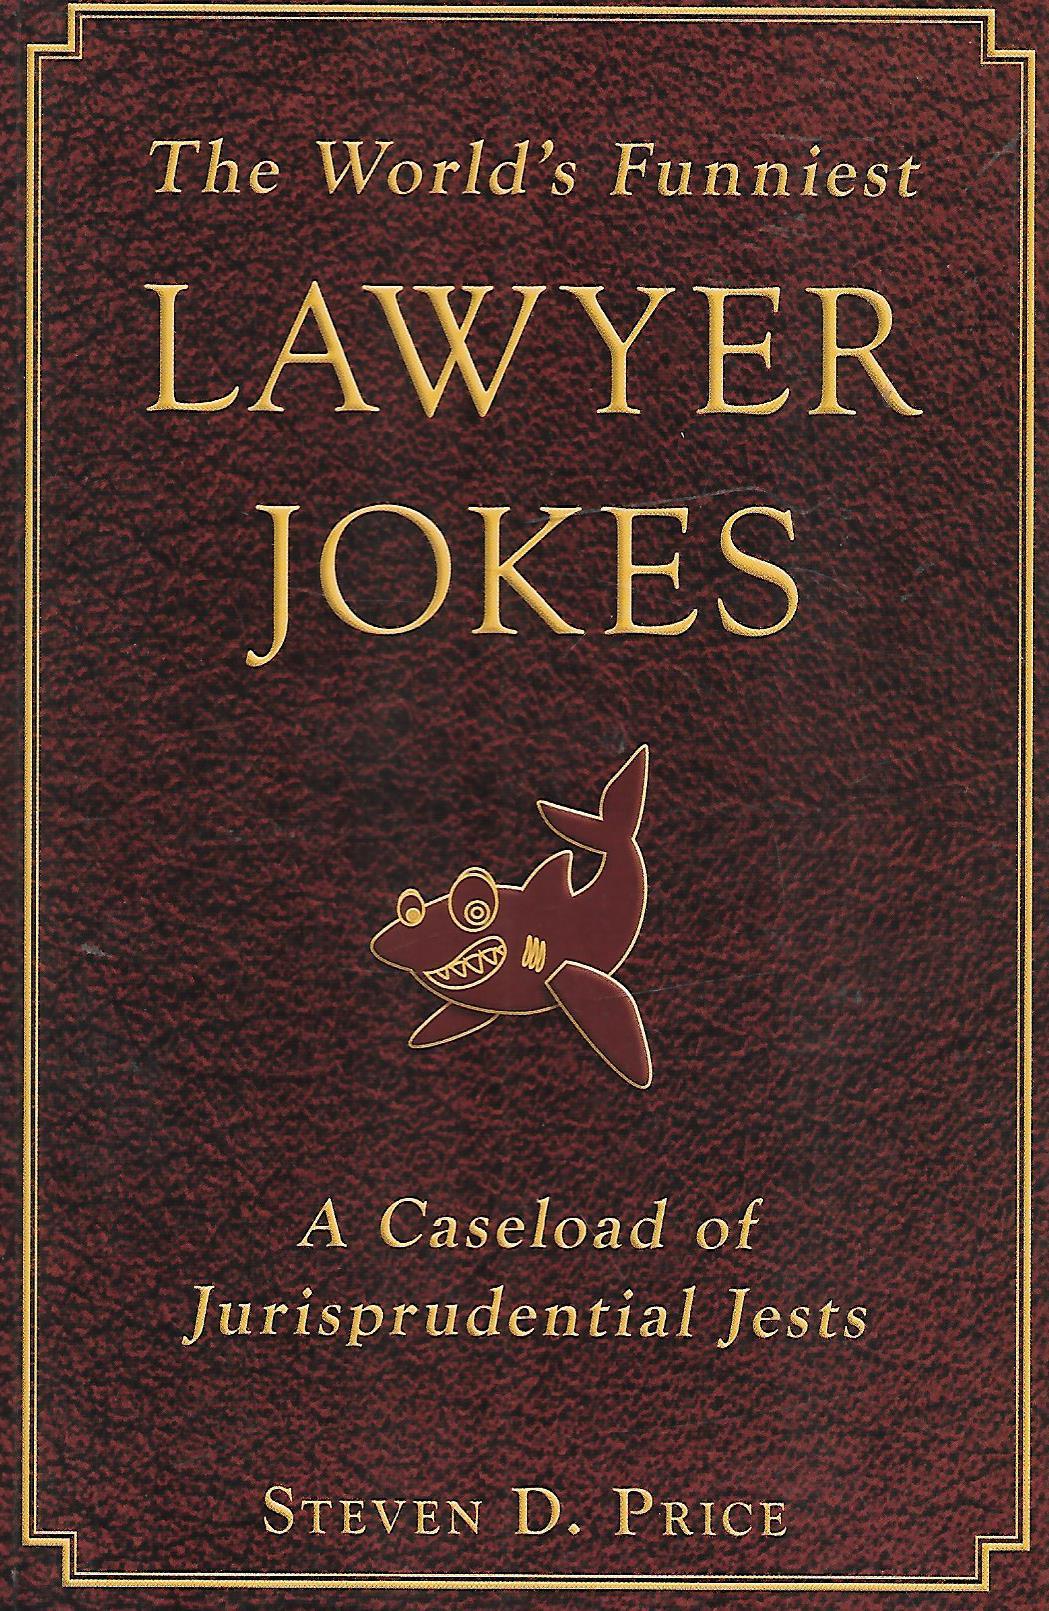 The World's Lawyer Jokes A Caseload Of Jurisprudential Jests